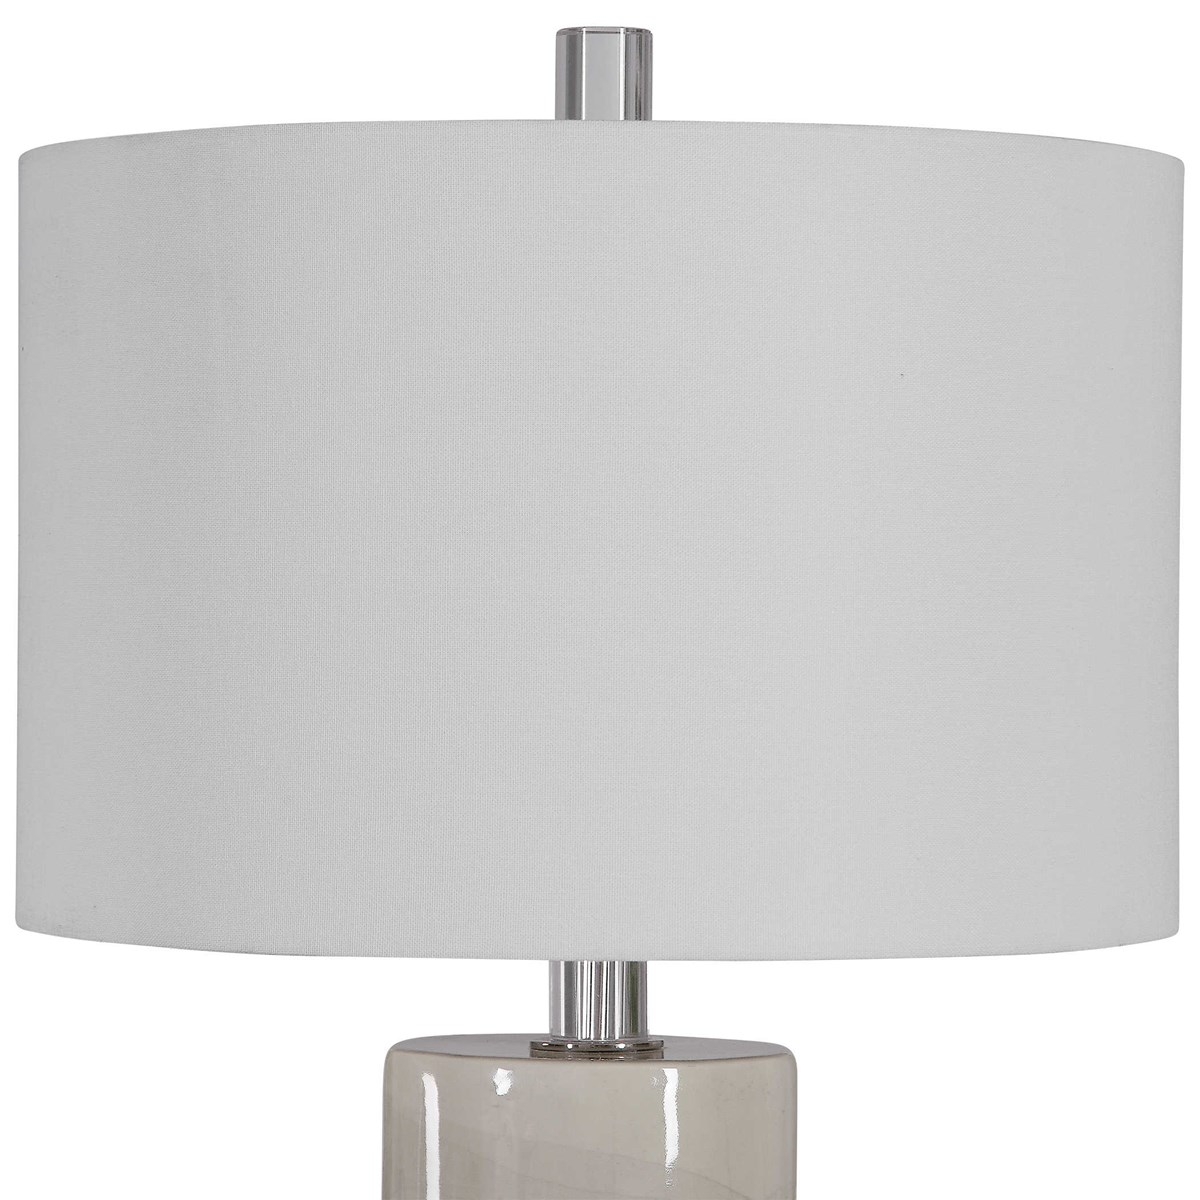 ZESIRO TABLE LAMP - Image 4